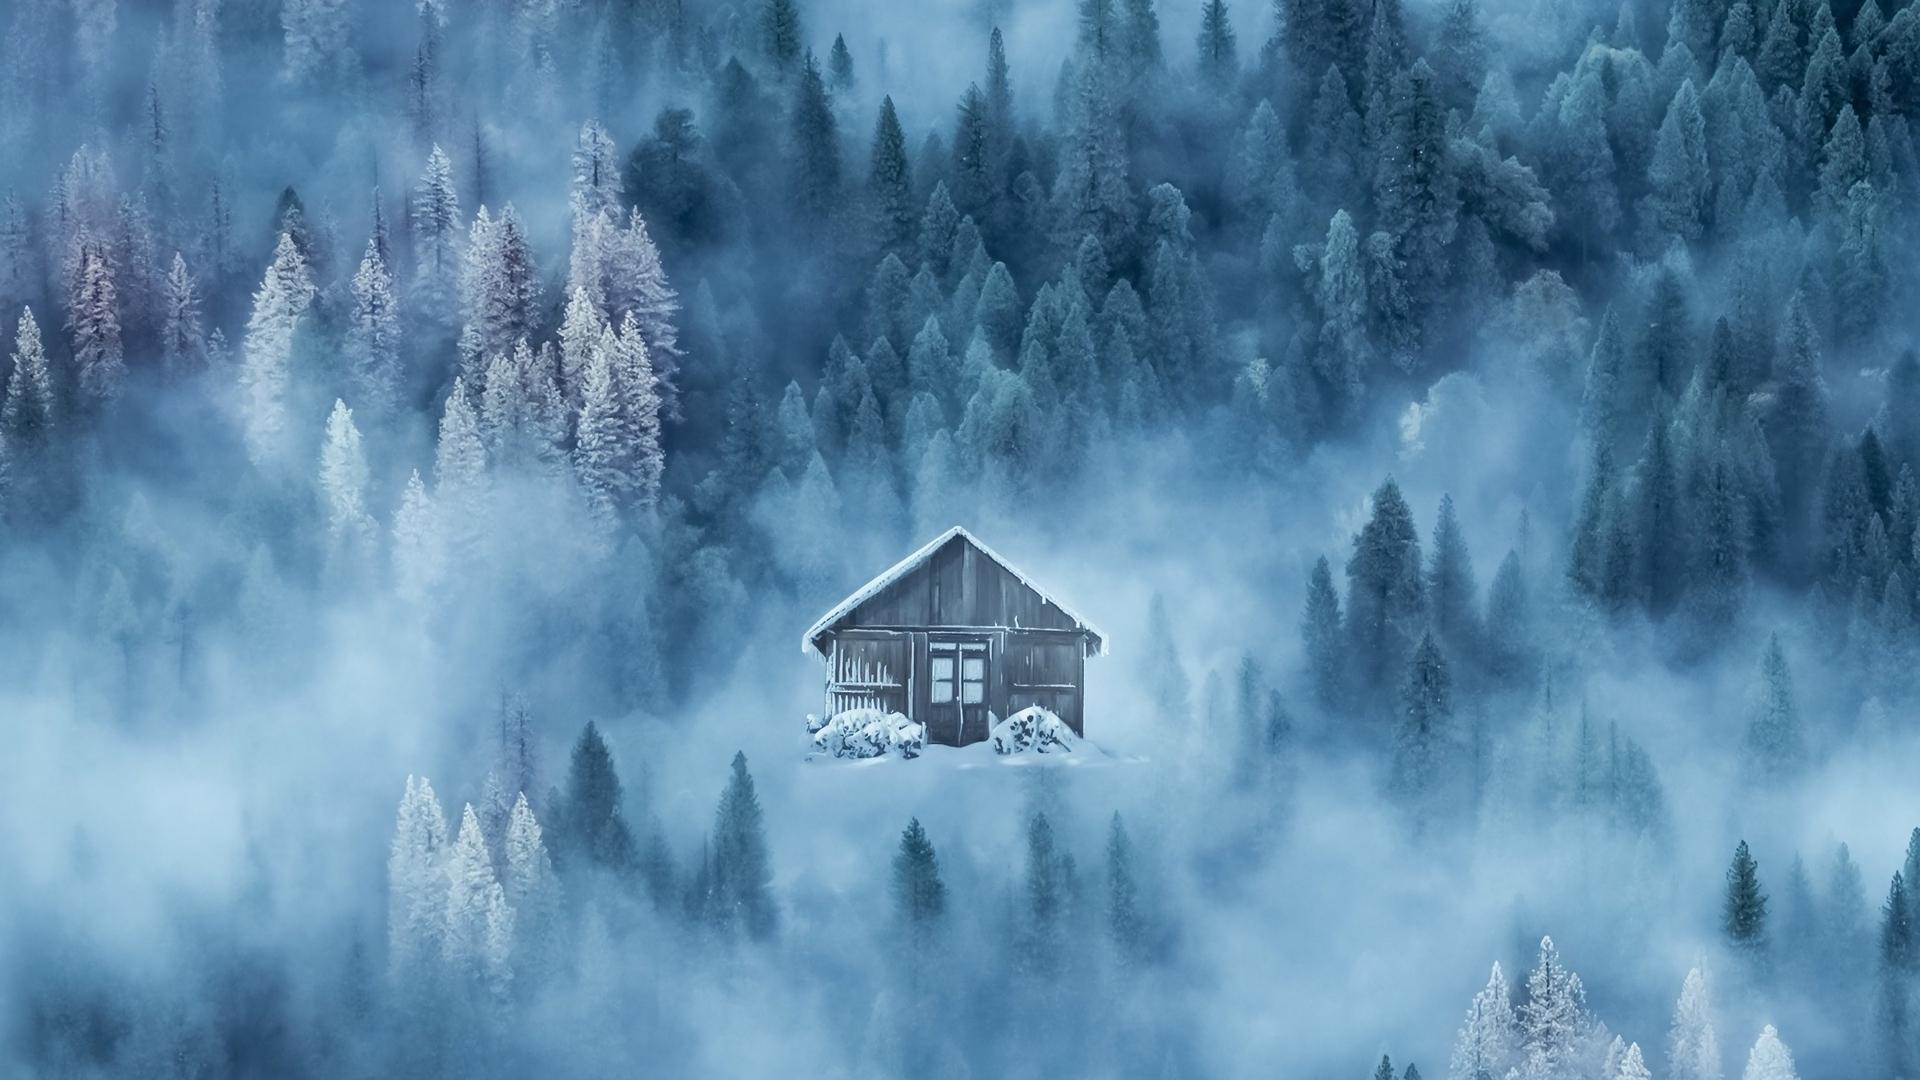 Download wallpaper 1920x1080 house, fog, snow, winter